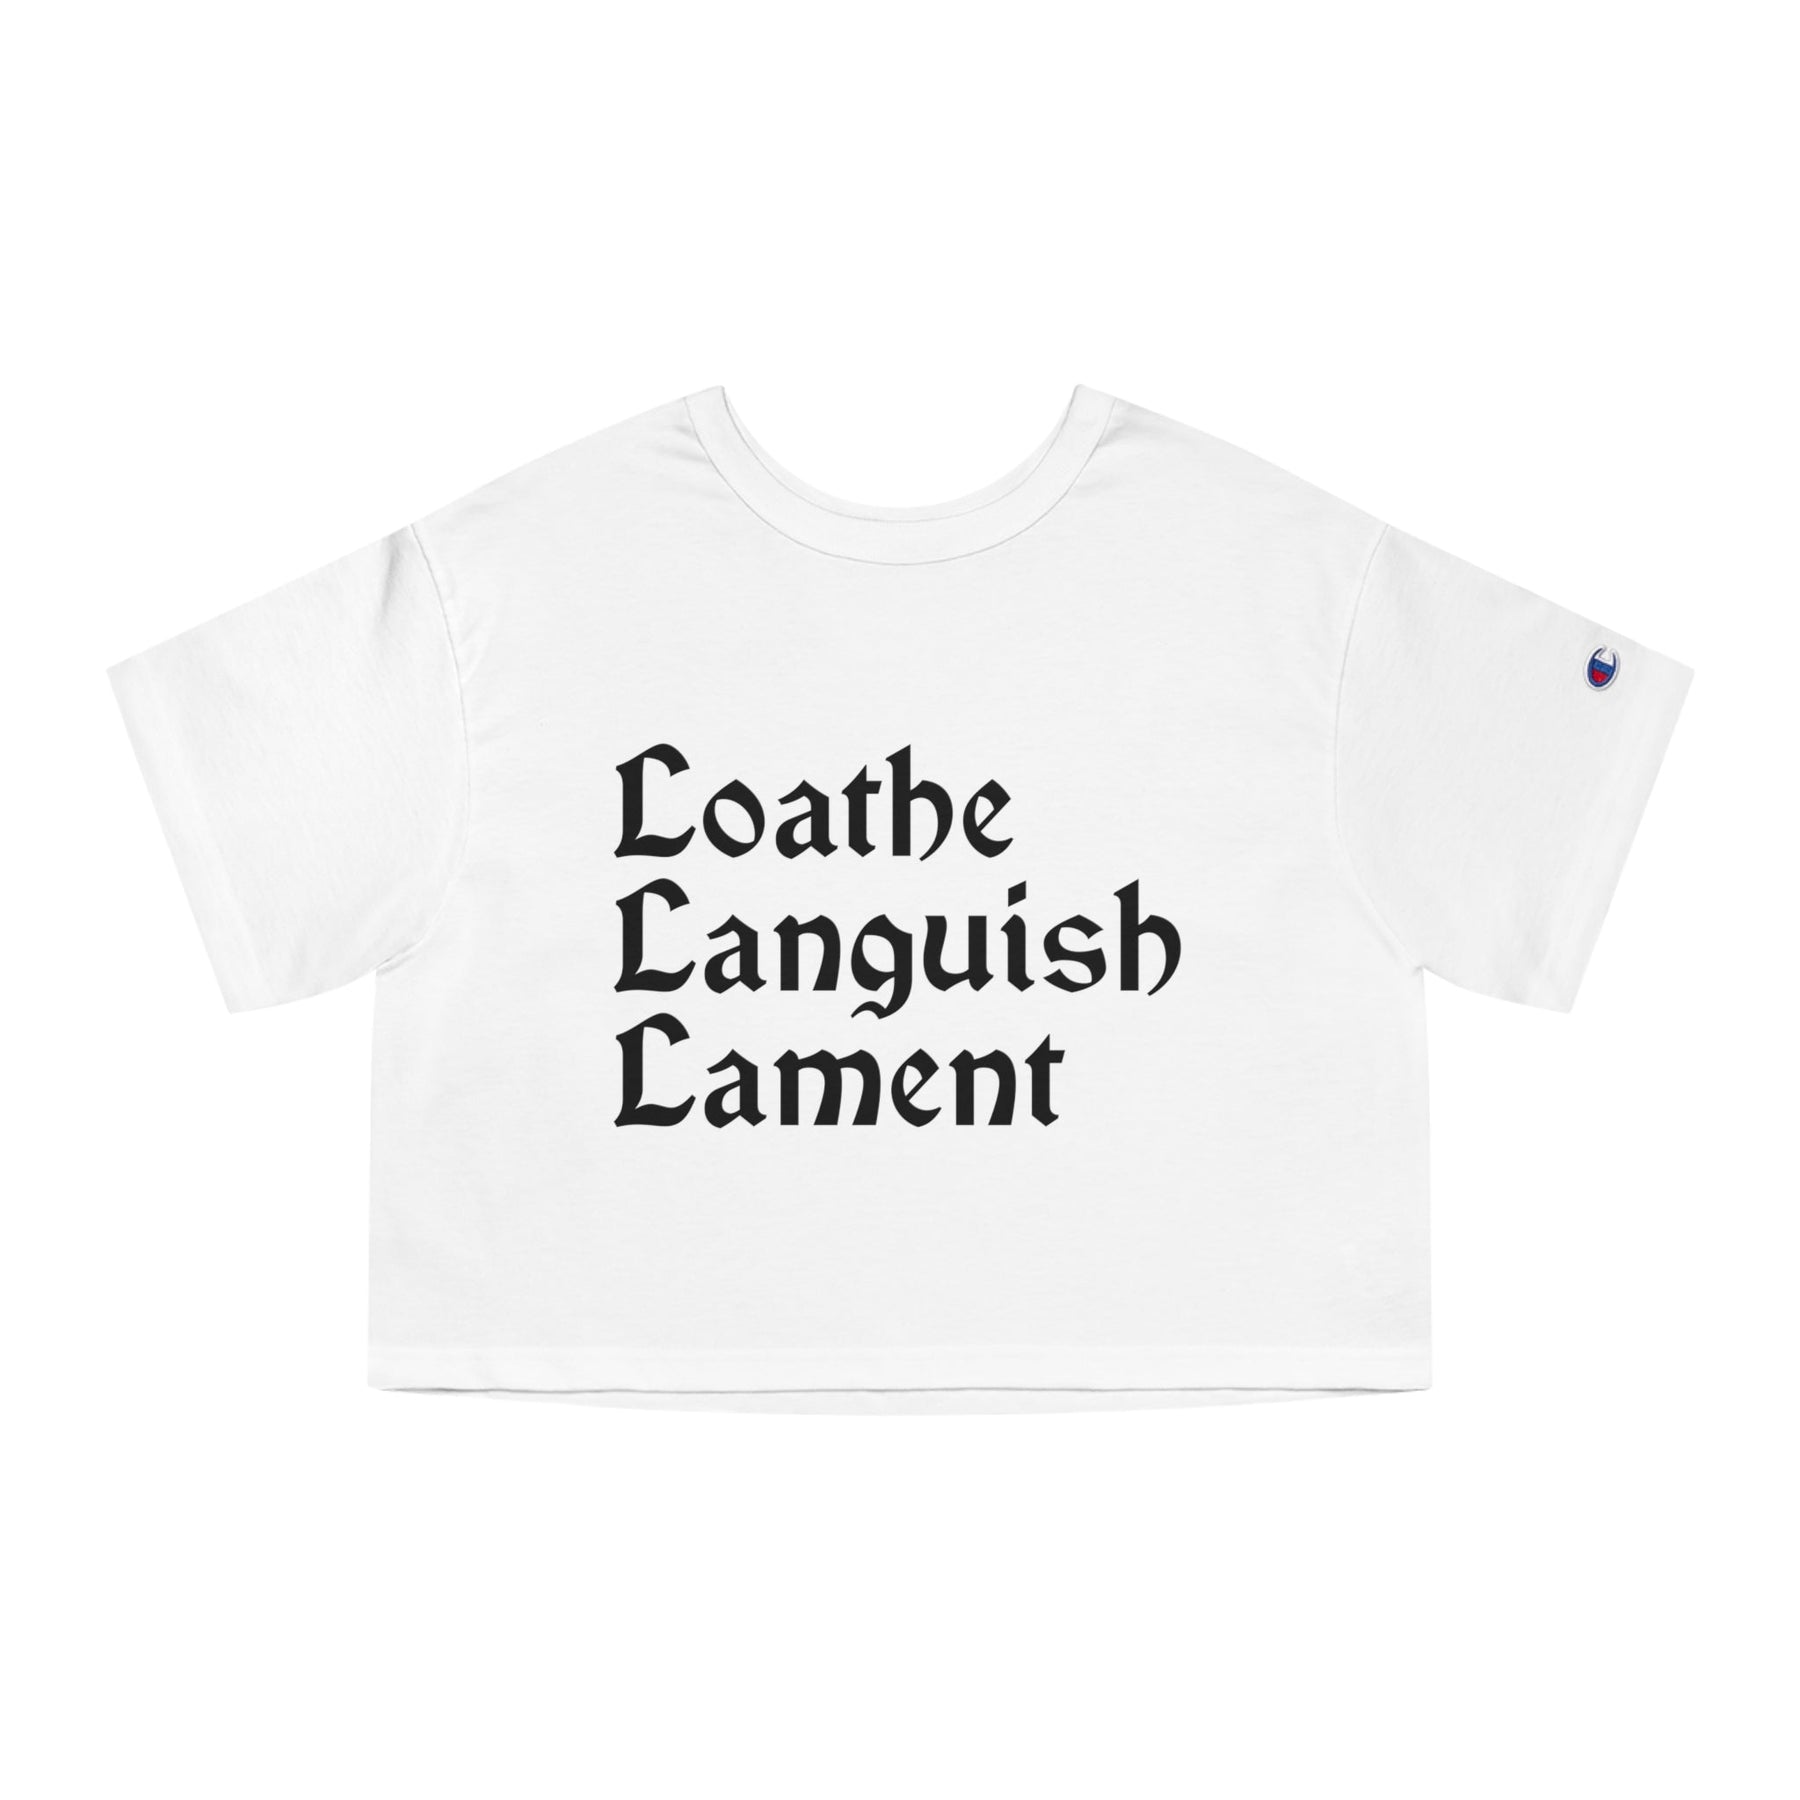 Loathe Languish Lament Heavyweight Cropped T-Shirt - Goth Cloth Co.T-Shirt12855376343088114603